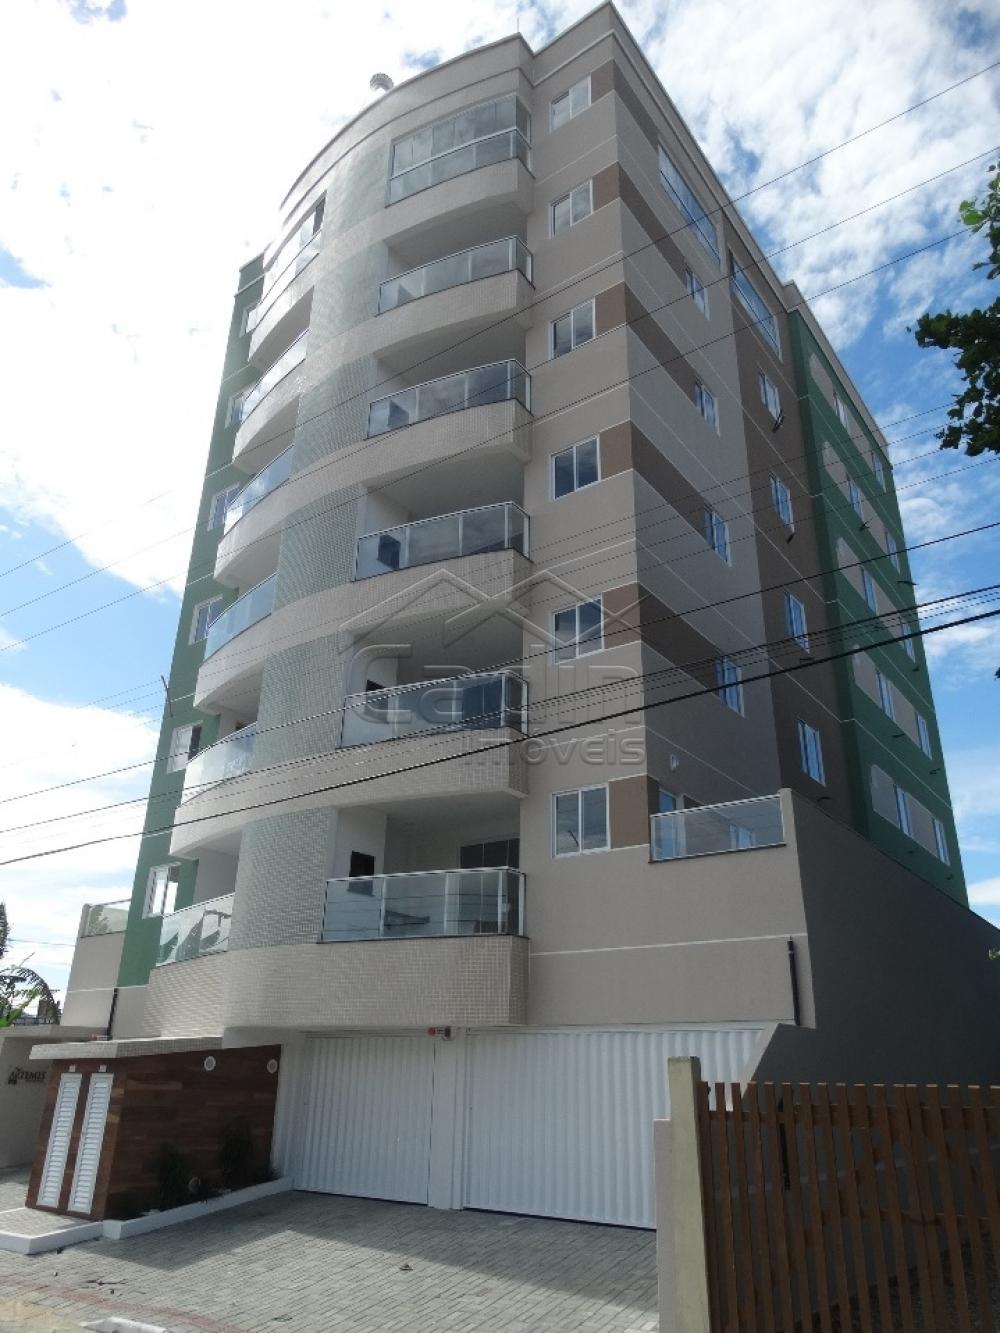 Navegantes Gravata Apartamento Venda R$560.000,00 Condominio R$350,00 2 Dormitorios 1 Vaga 